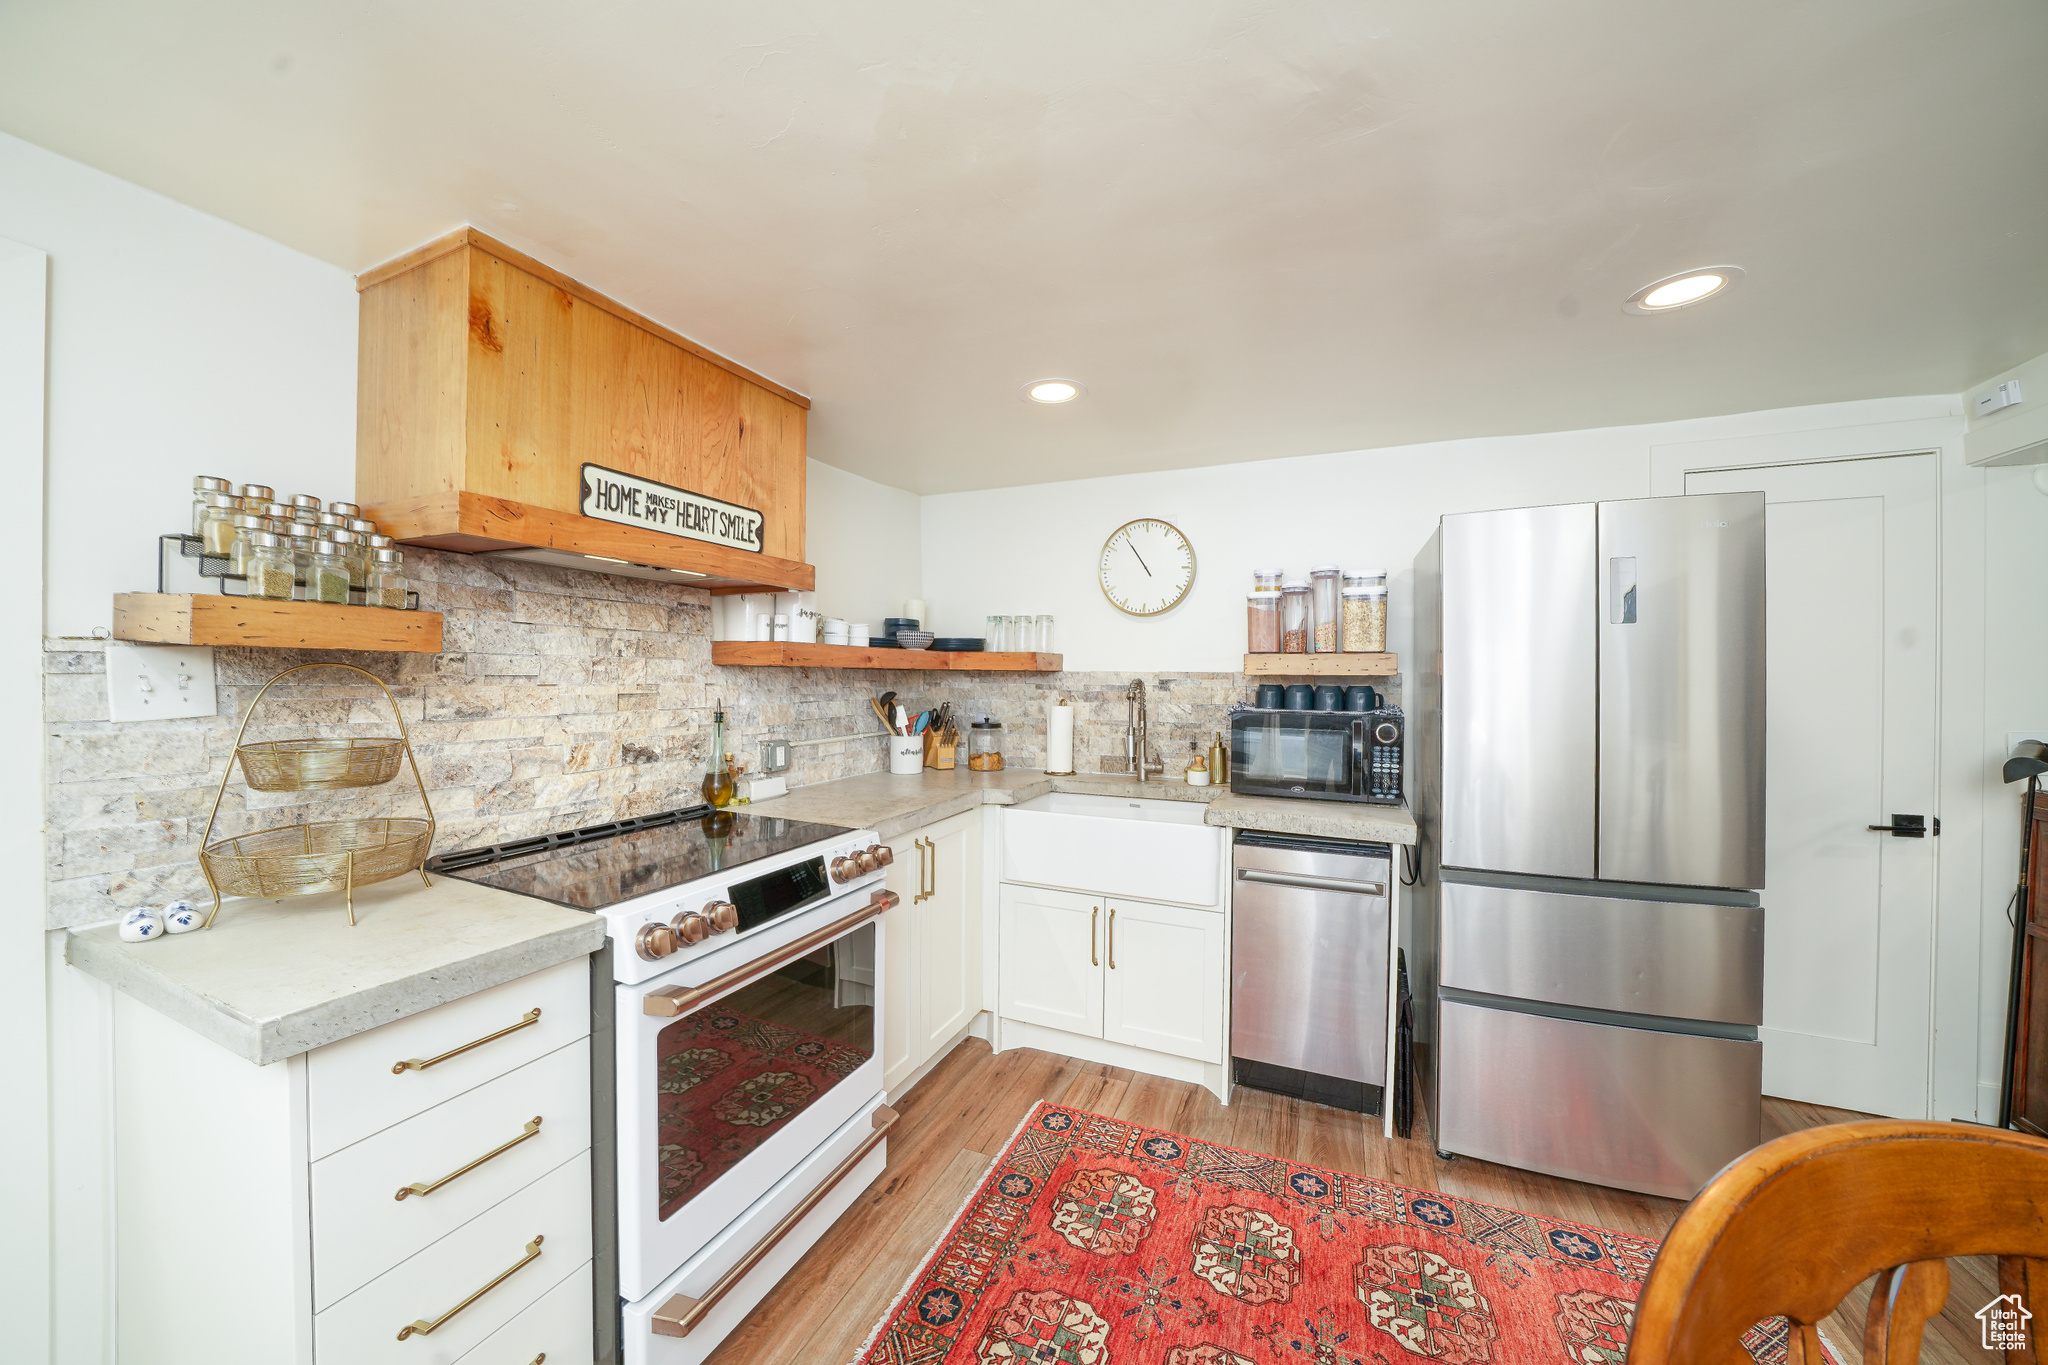 Kitchen with light laminate flooring, stainless steel appliances, tasteful backsplash, white cabinets, and sink